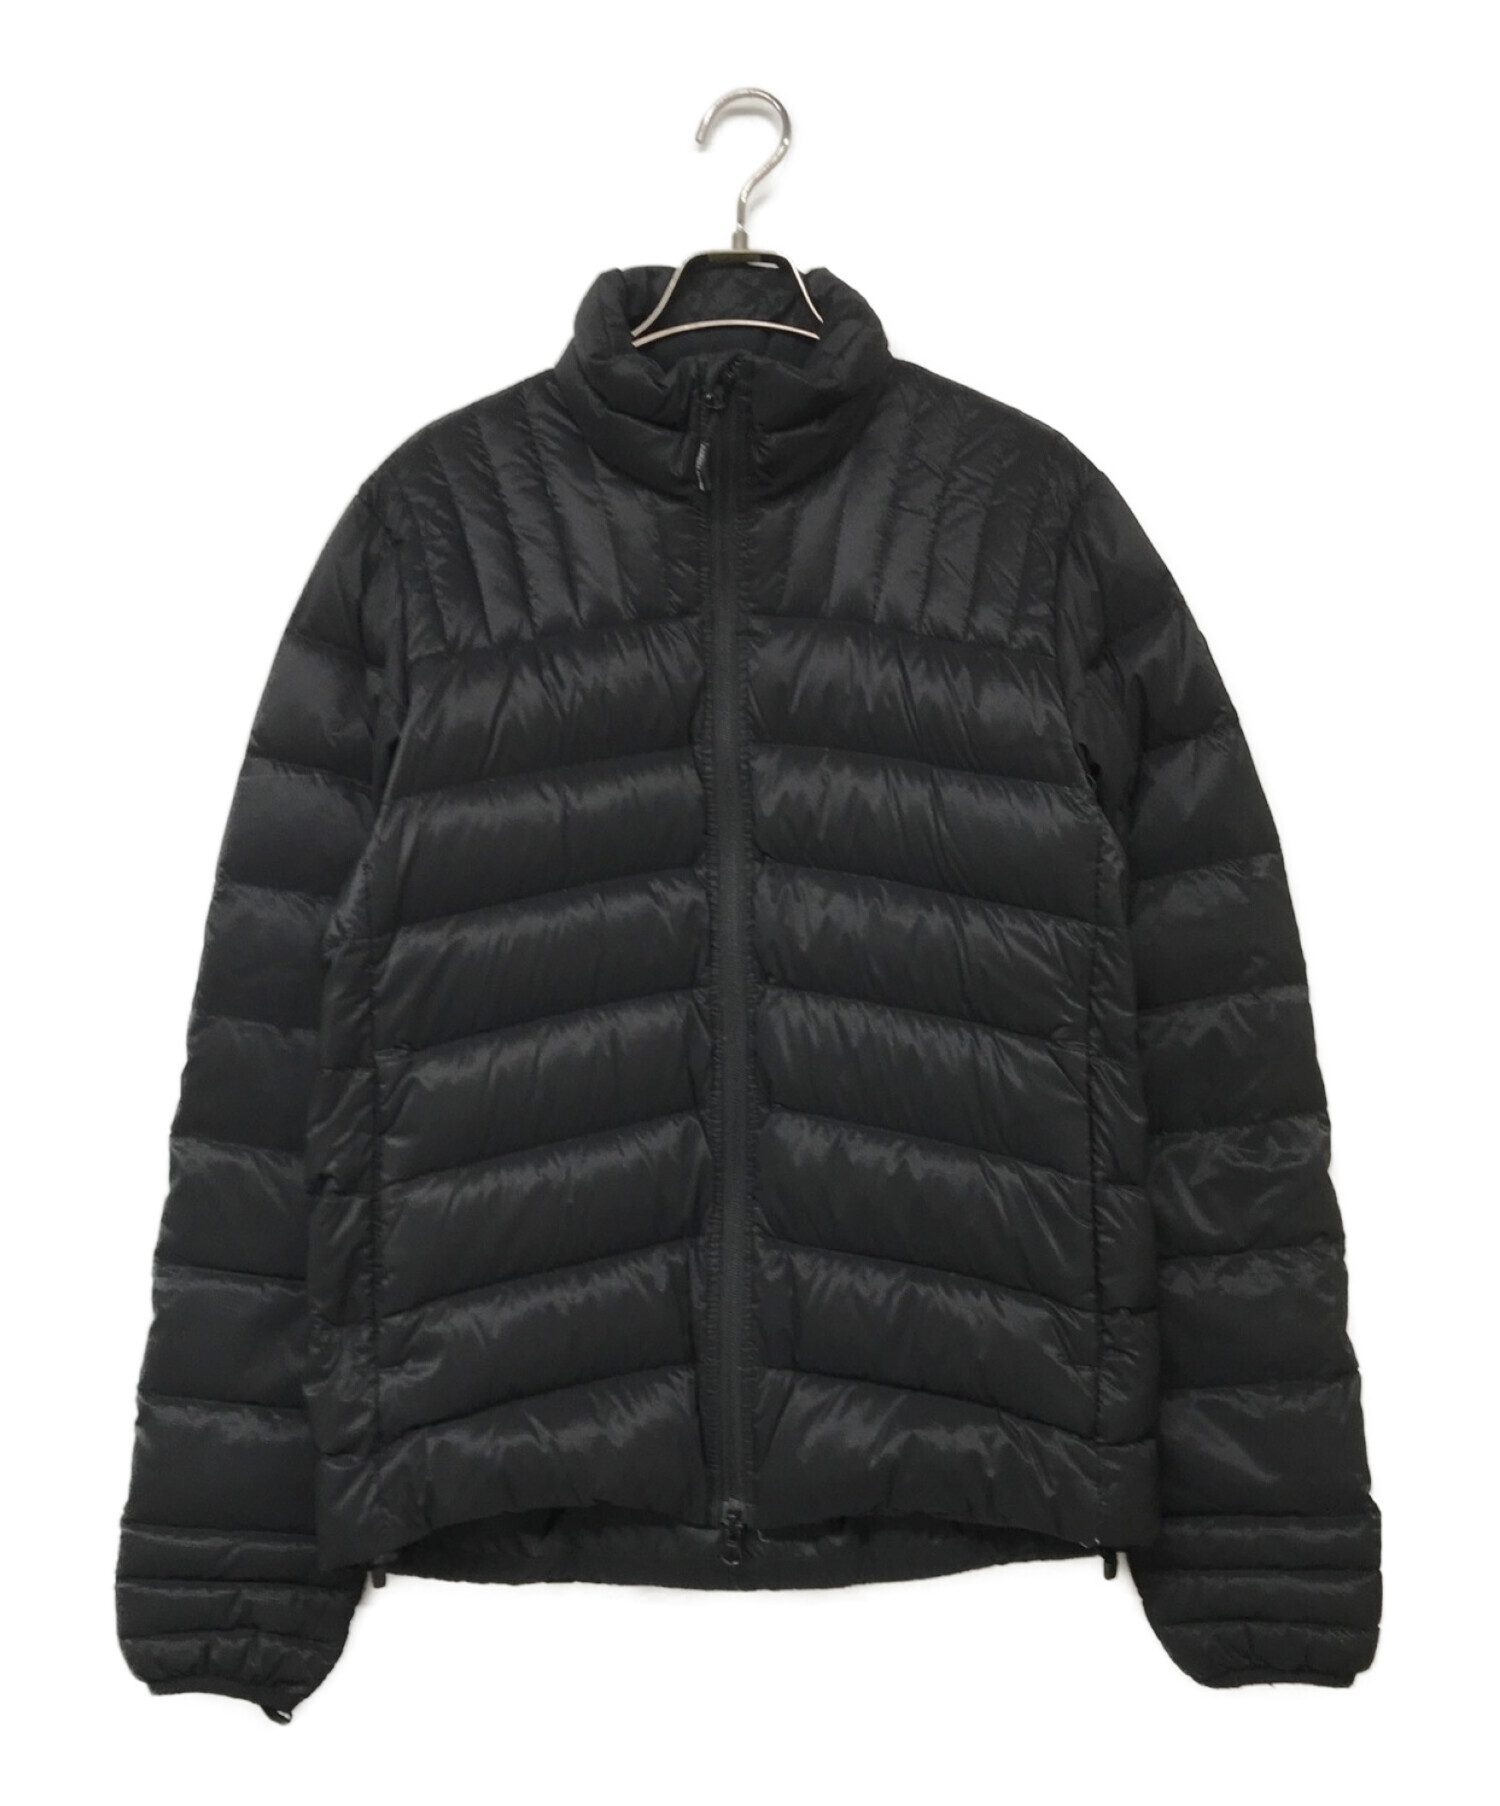 CANADA GOOSE brookvale jacket 黒タグ Sサイズ - ダウンジャケット